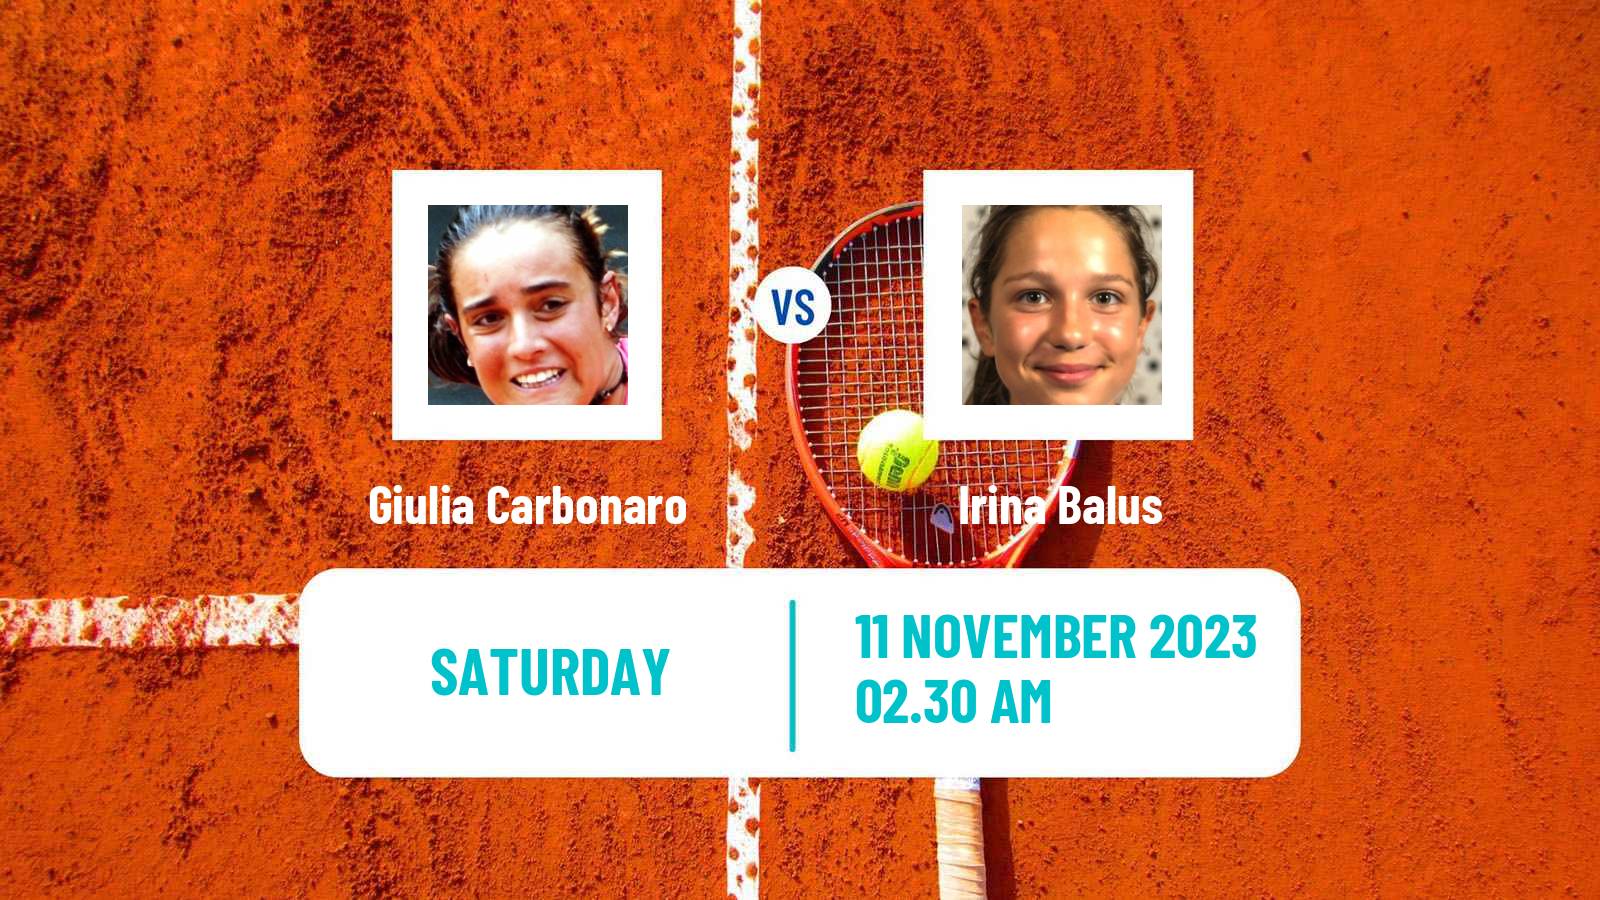 Tennis ITF W15 Antalya 17 Women Giulia Carbonaro - Irina Balus